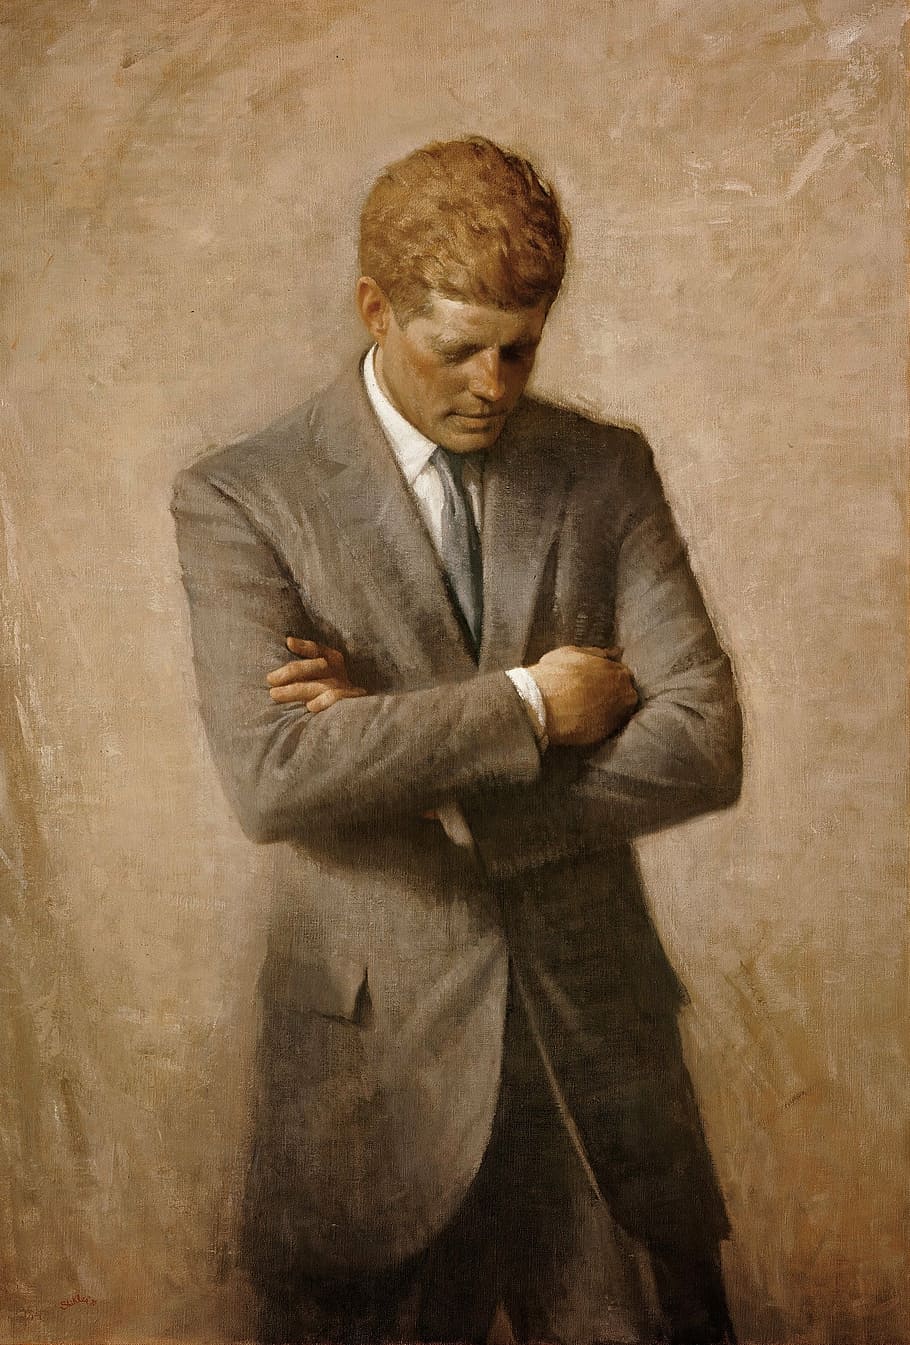 John F. Kennedy painting, john f kennedy, president, usa, united states